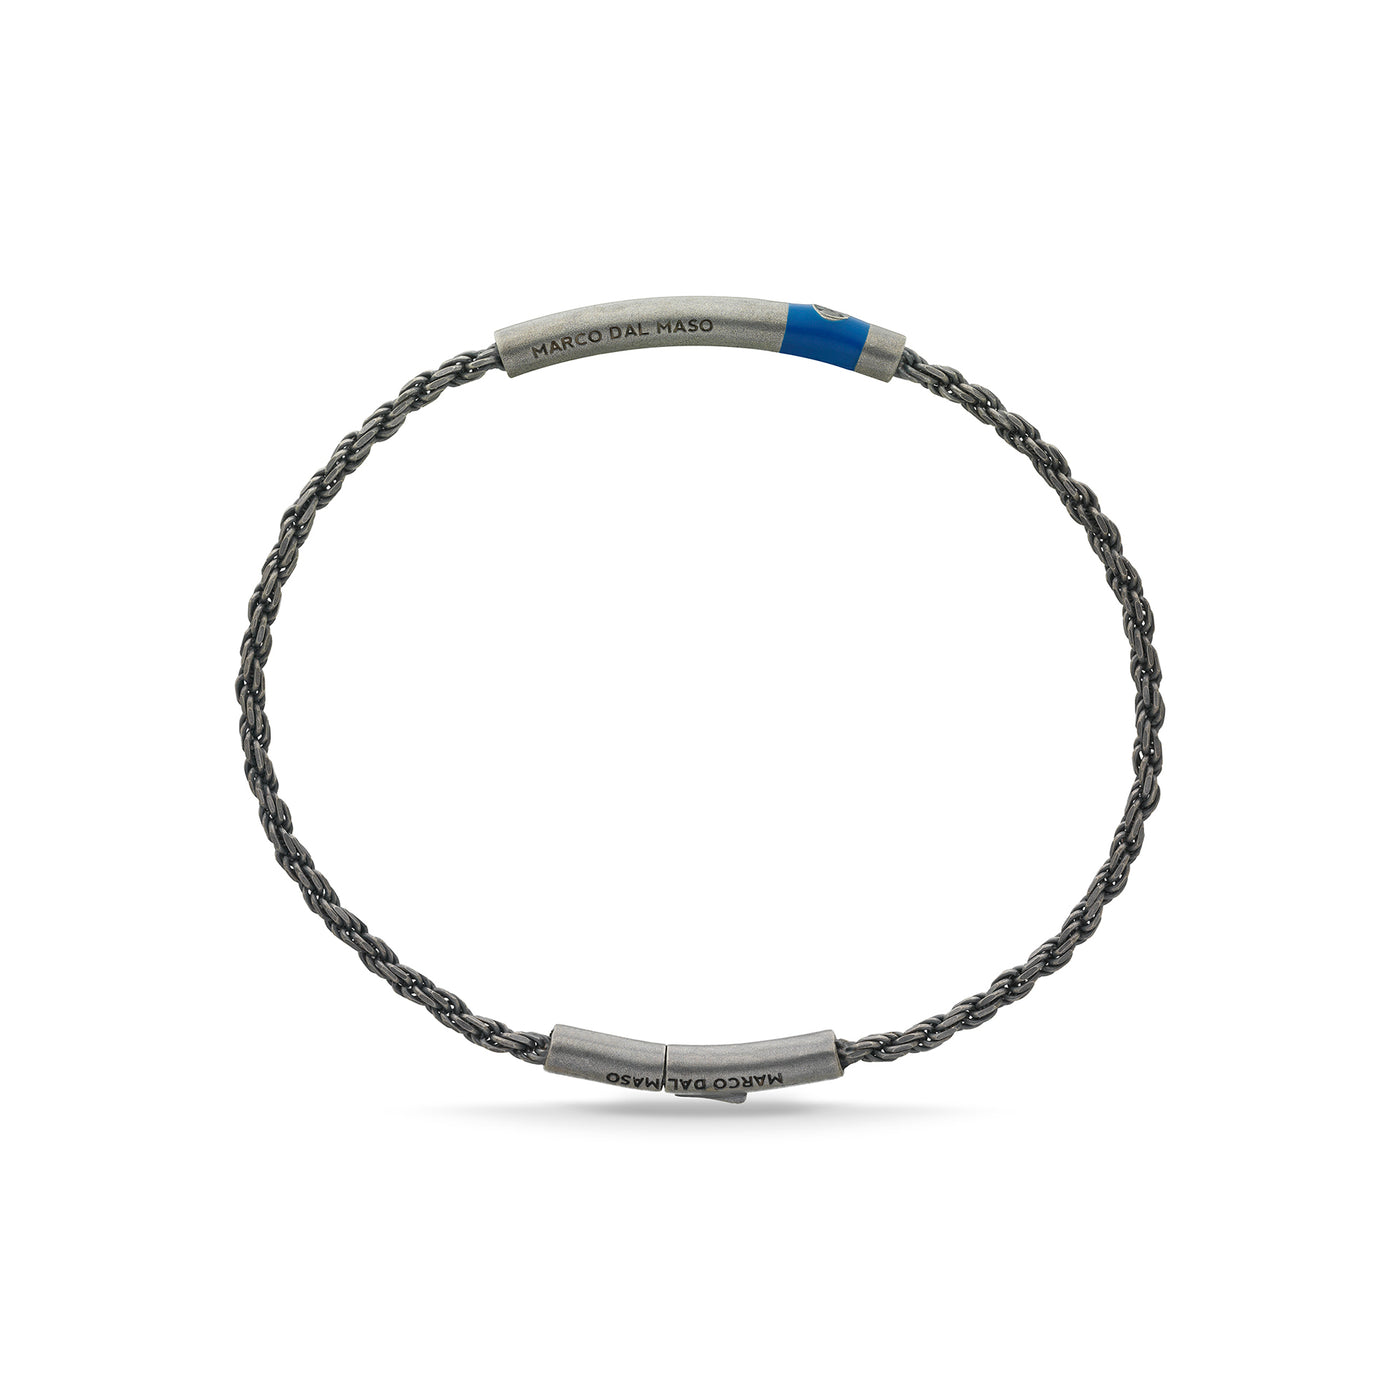 ULYSSES Cord Oxidized Bracelet with black diamond and blue enamel